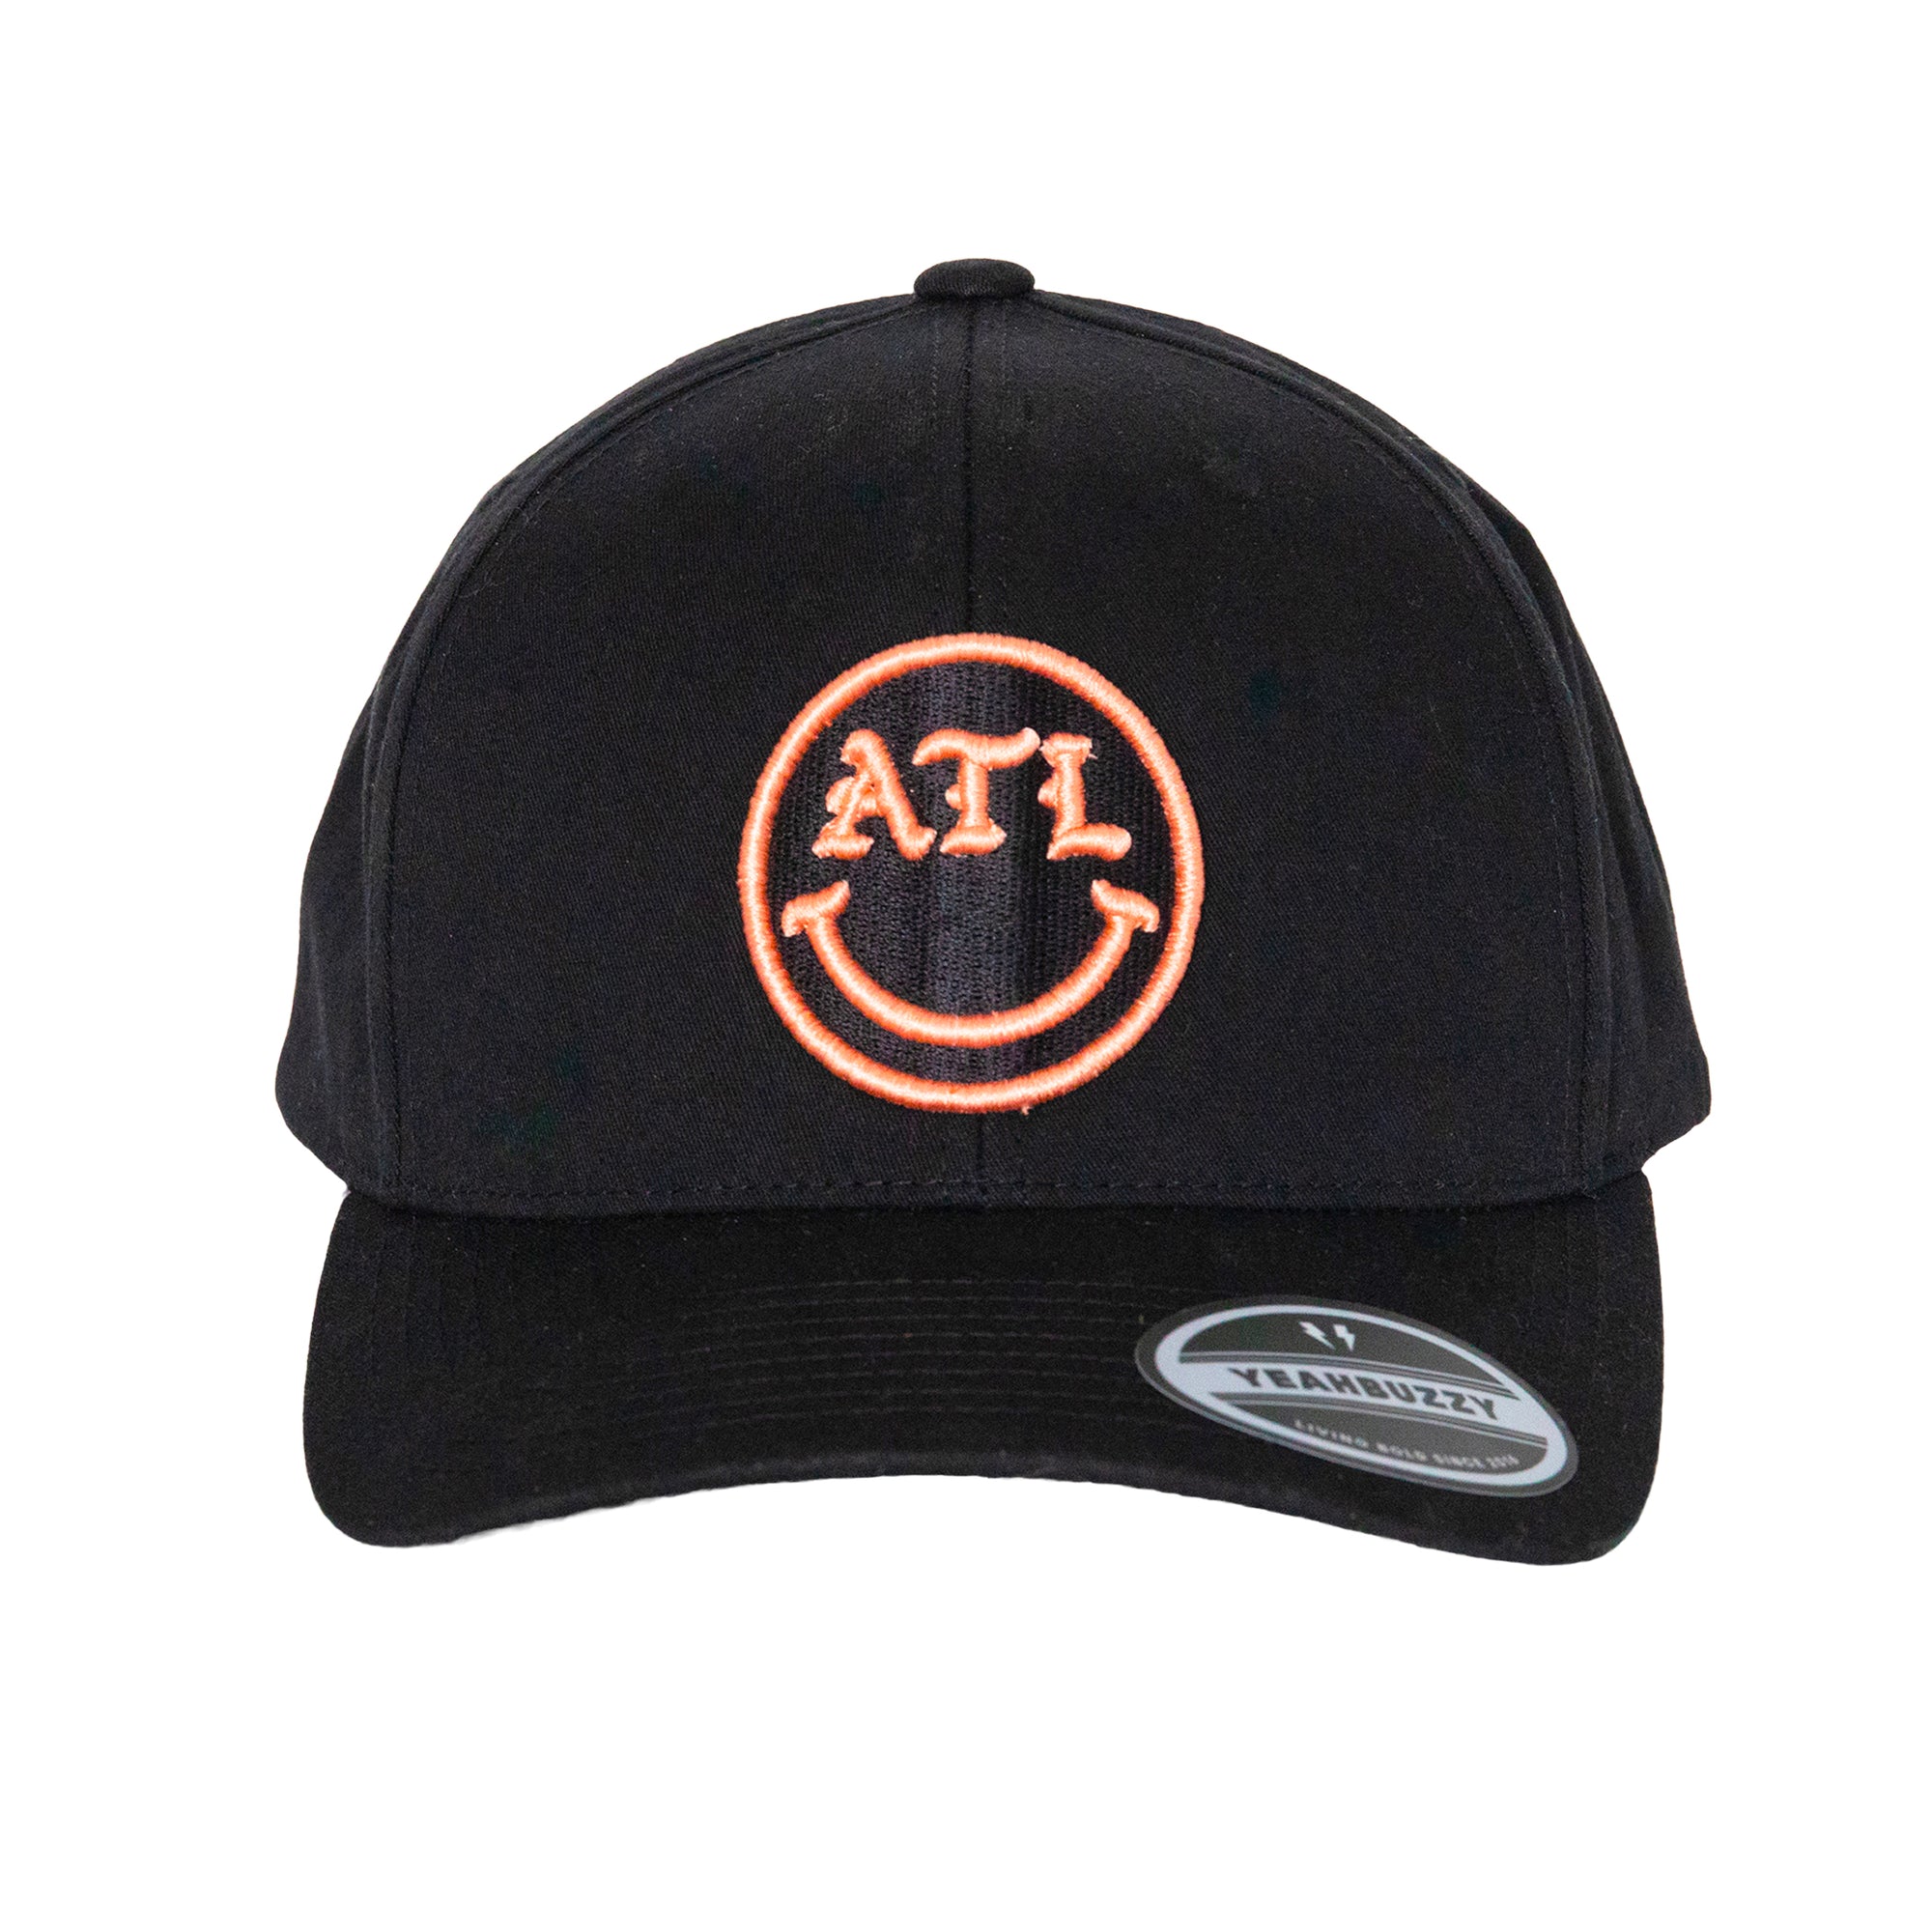 ATL Smiley Cap